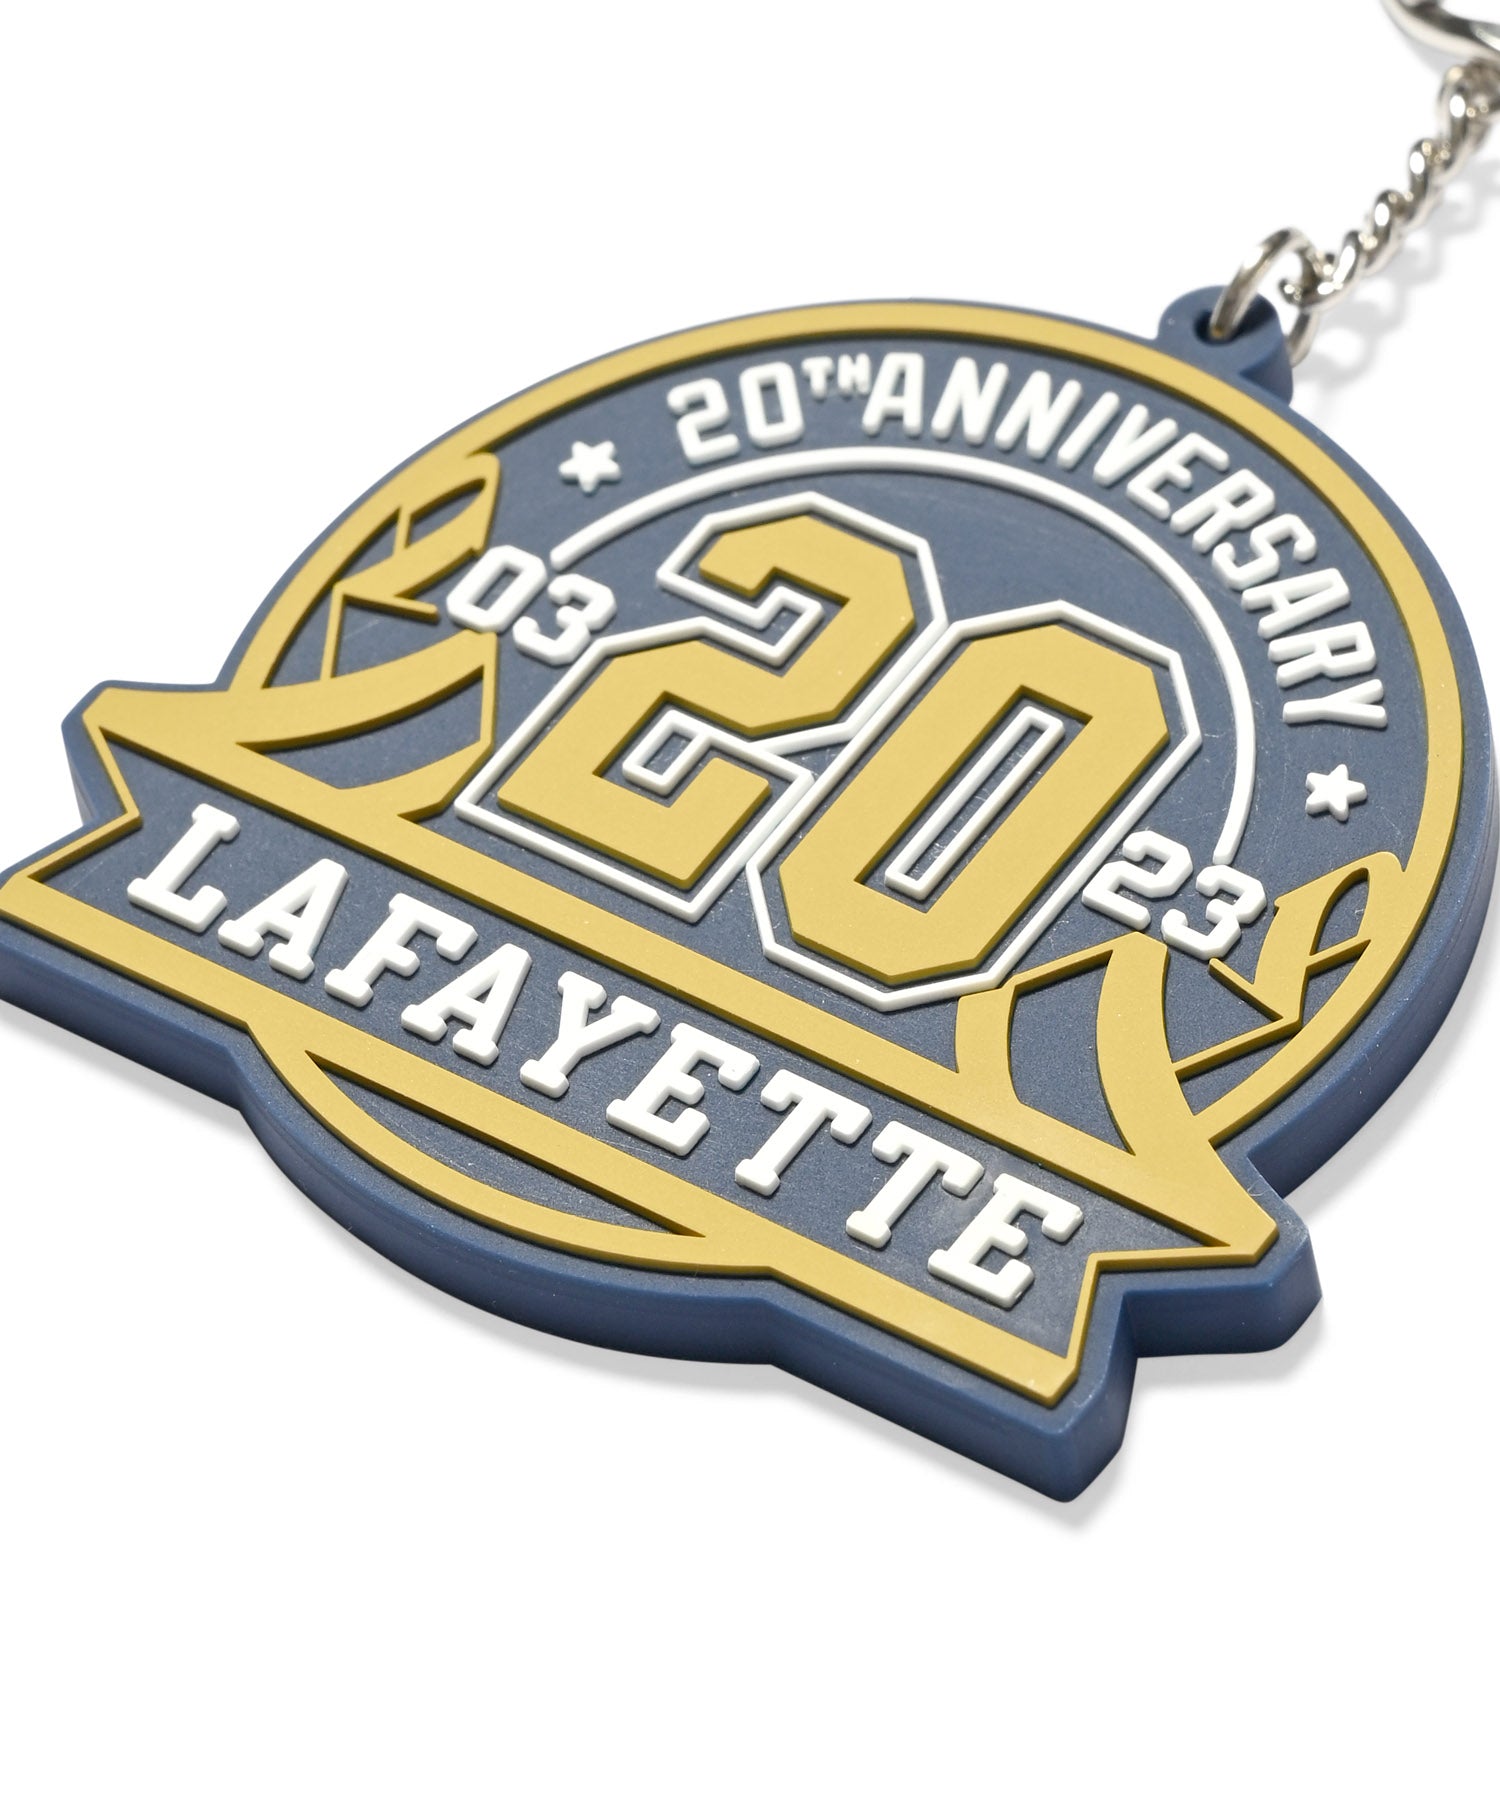 LFYT 20 週年紀念徽章橡膠鑰匙 CAHIN LS232302